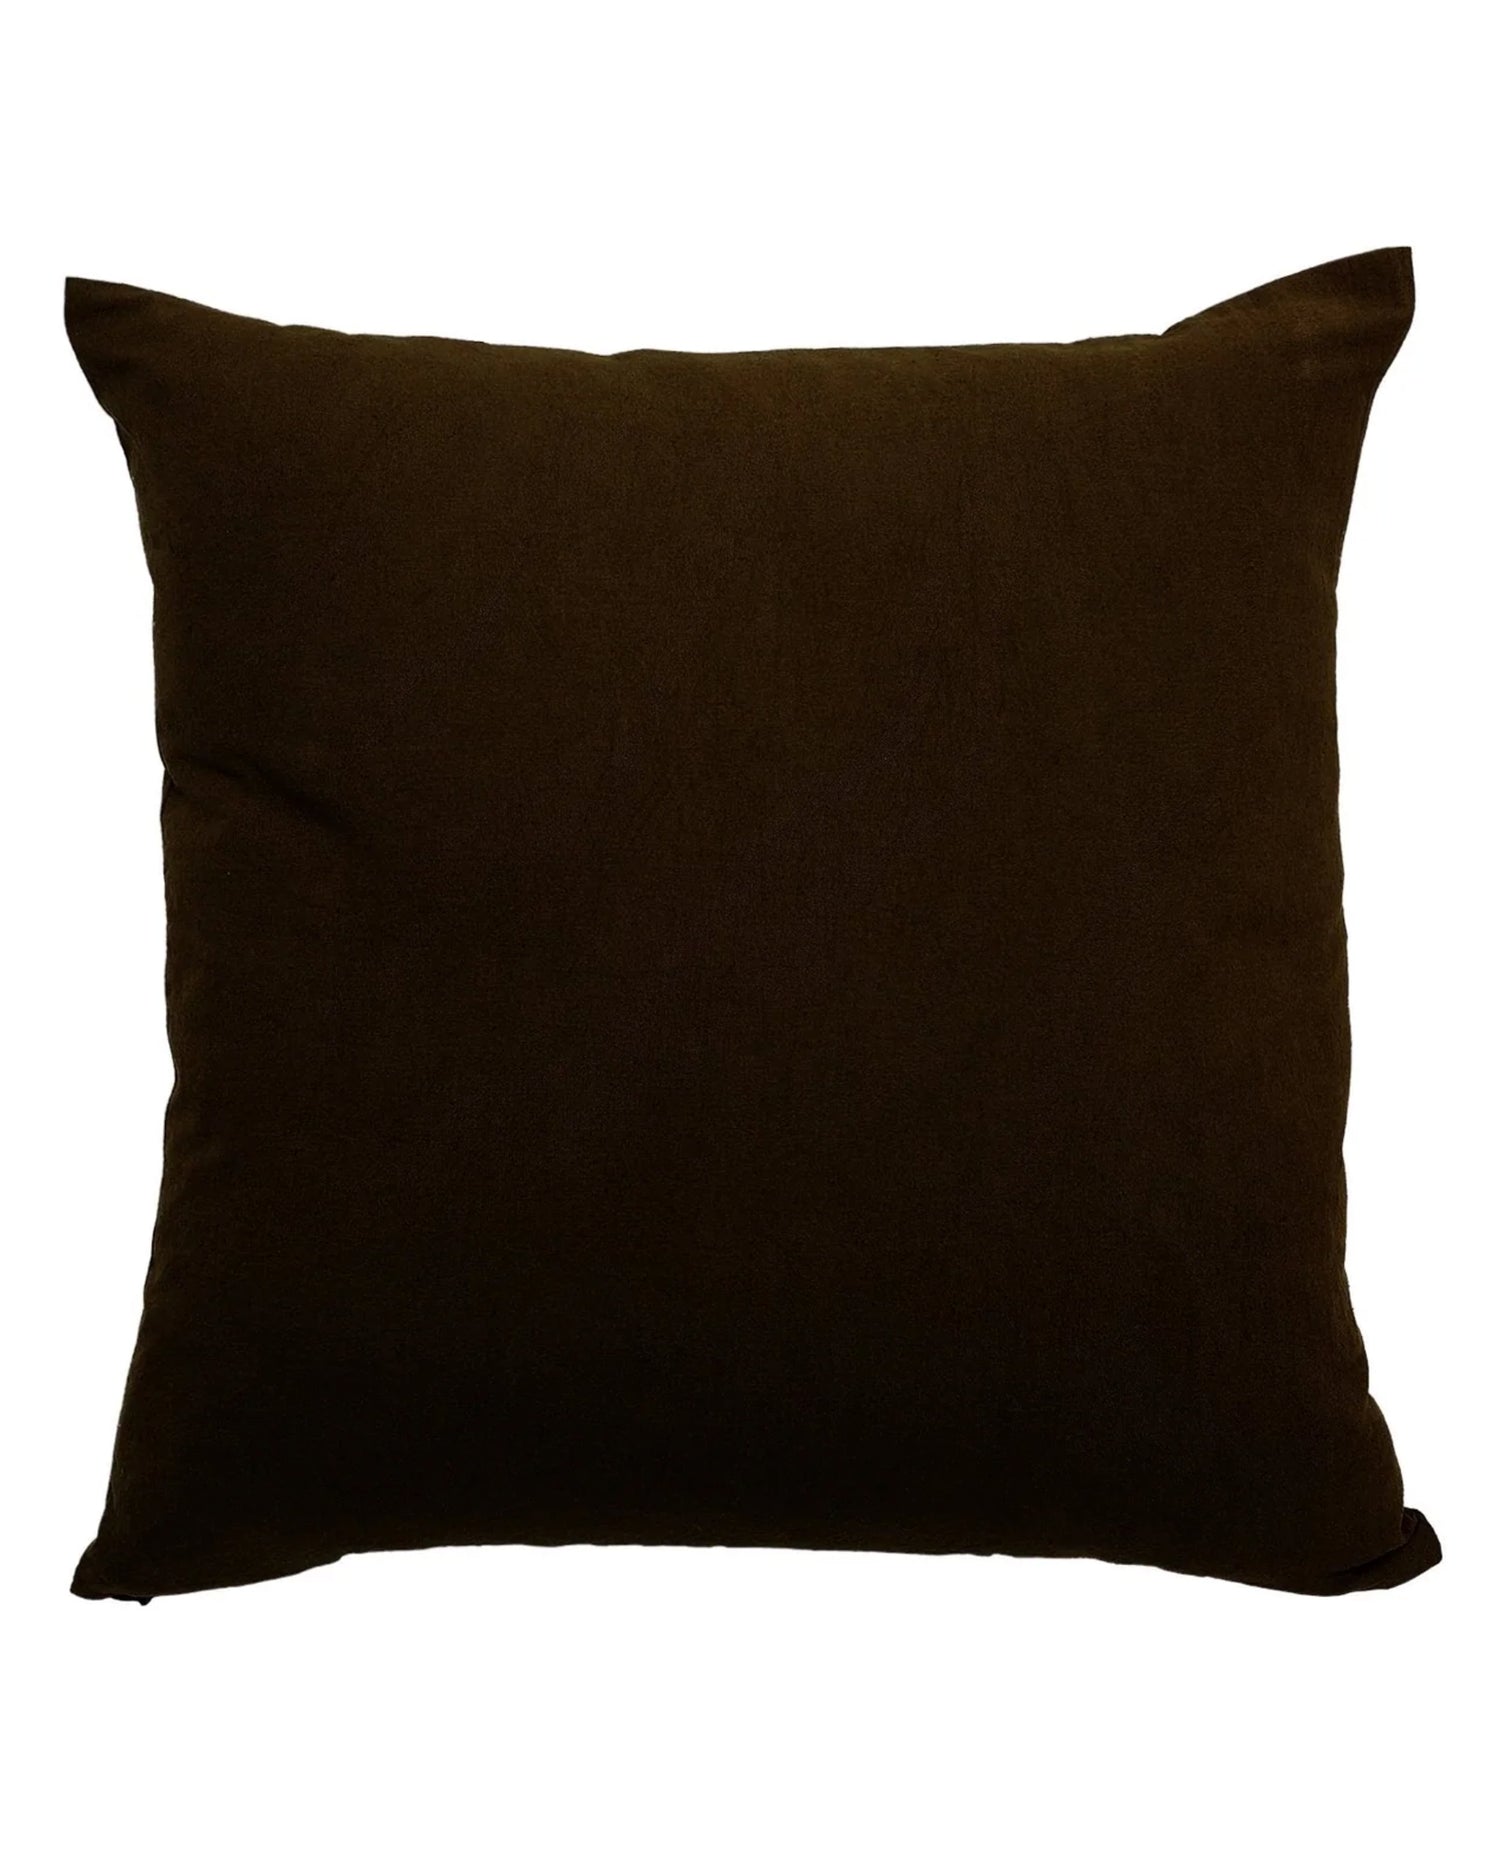 Obakki Japanese Mudcloth Pillow - Dark Brown